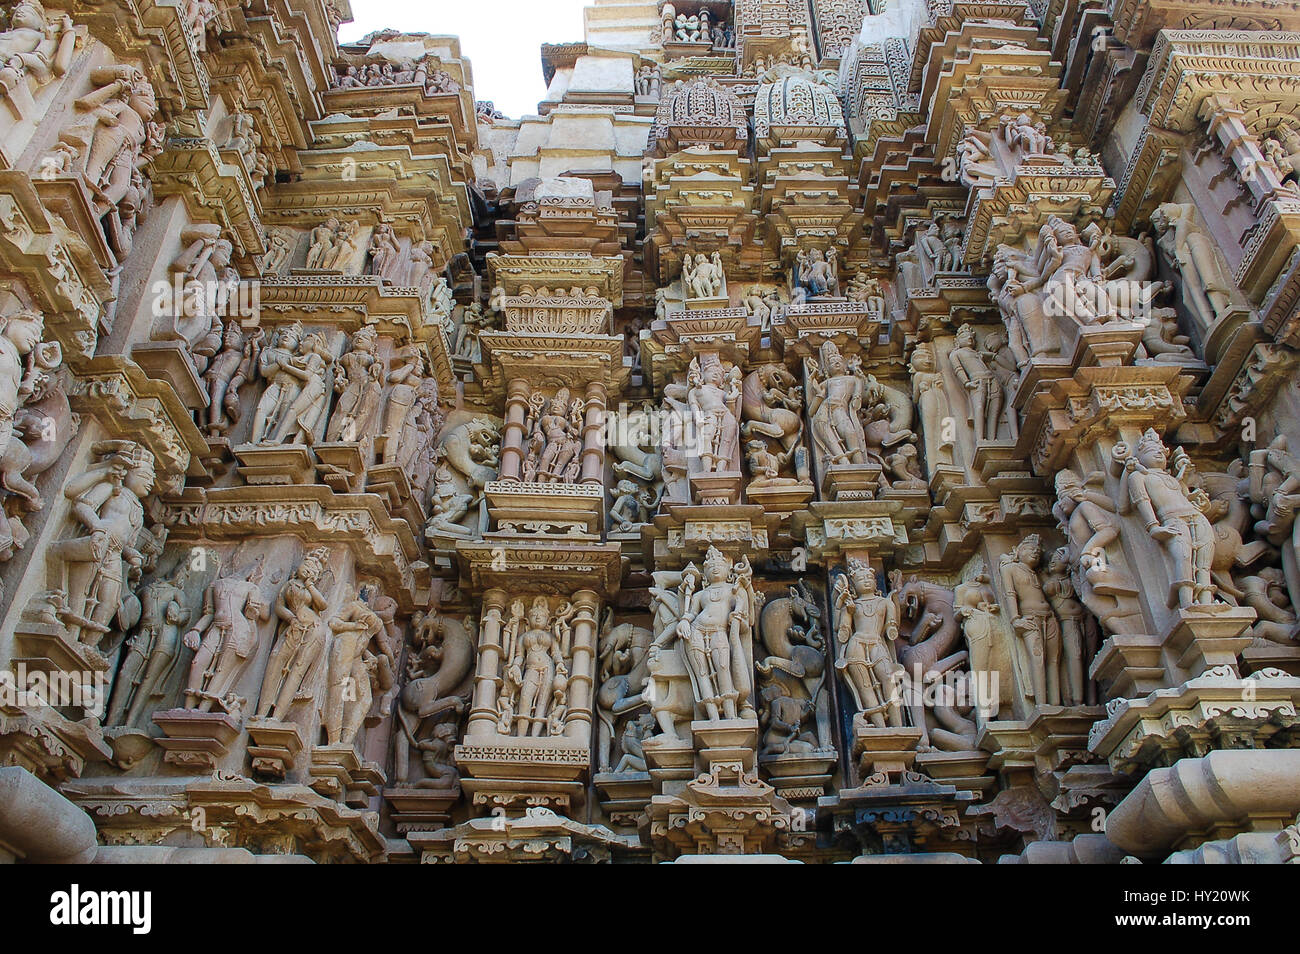 Hindu Deities carved into Jagdish Temple, Udaipur Stock Photo